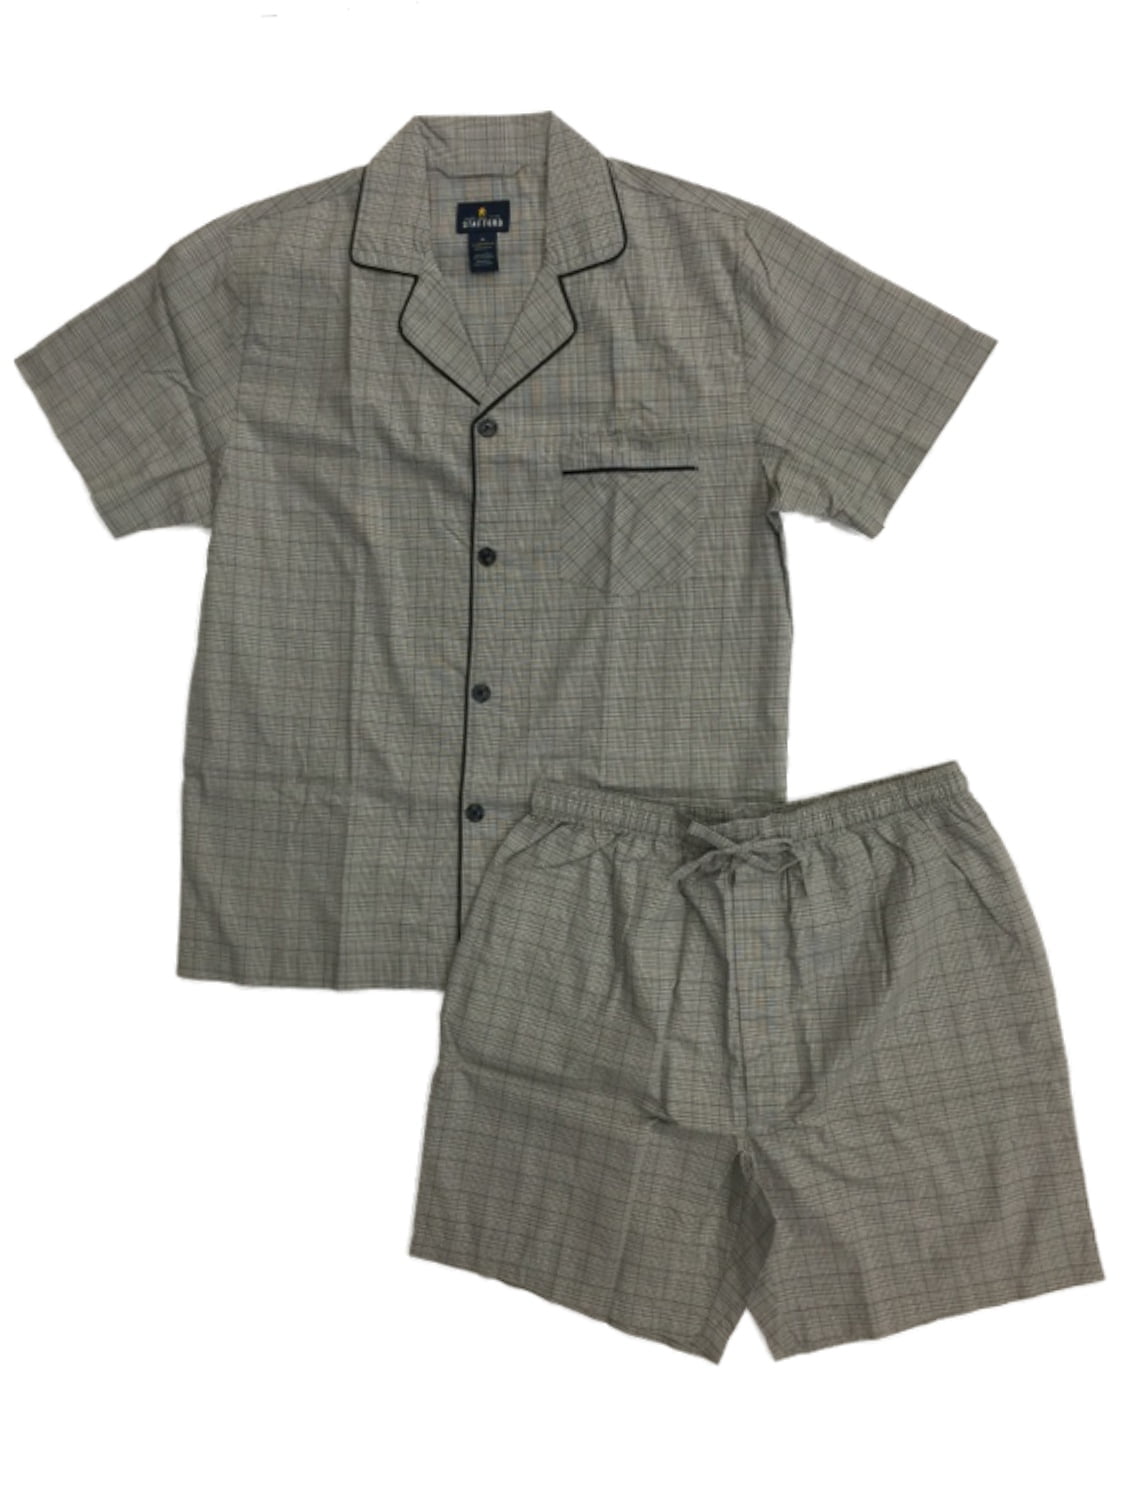 Hanes Men's Short Sleeve Pajama Set w/Woven Knit Pants S-5XL 3 COLORS 